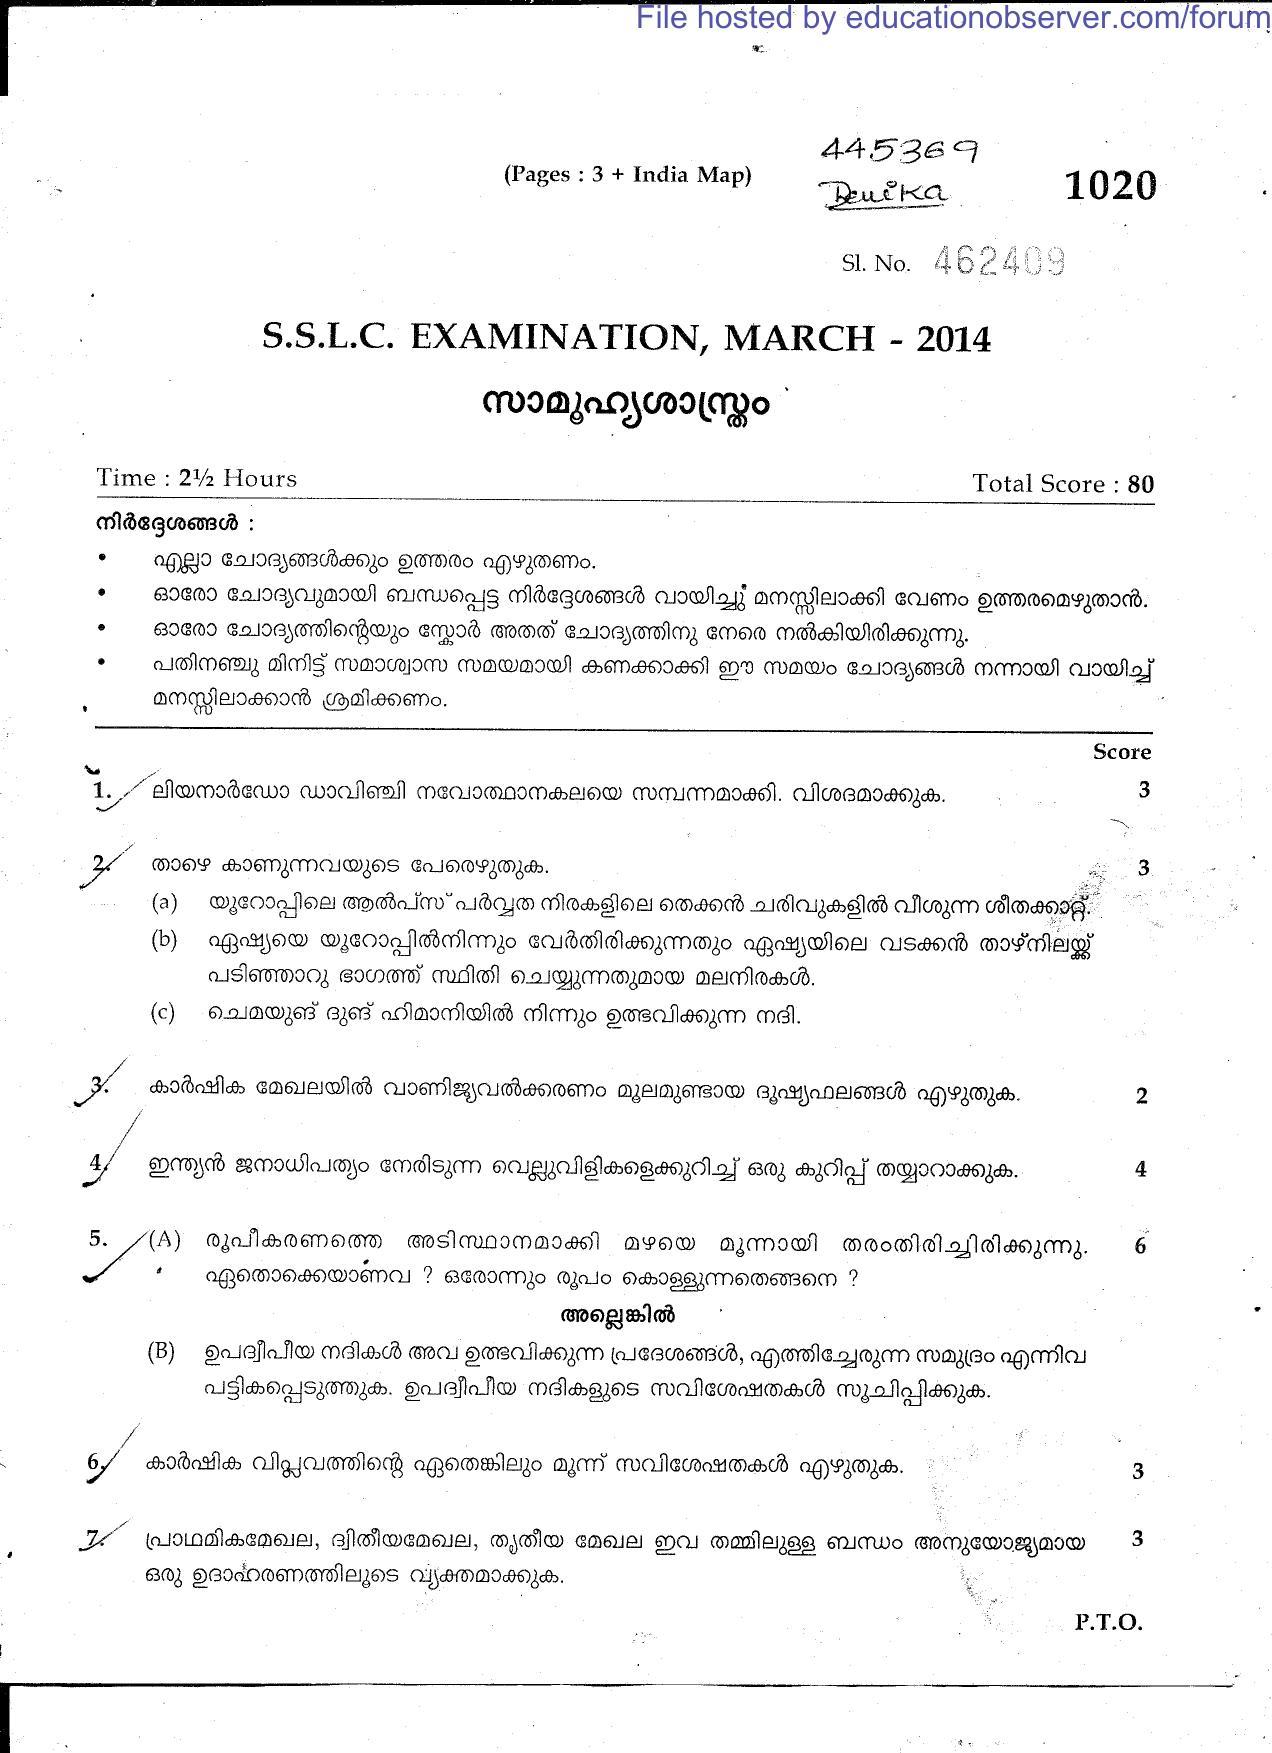 Kerala SSLC 2014 Social Science (MM) Question Paper - Page 1